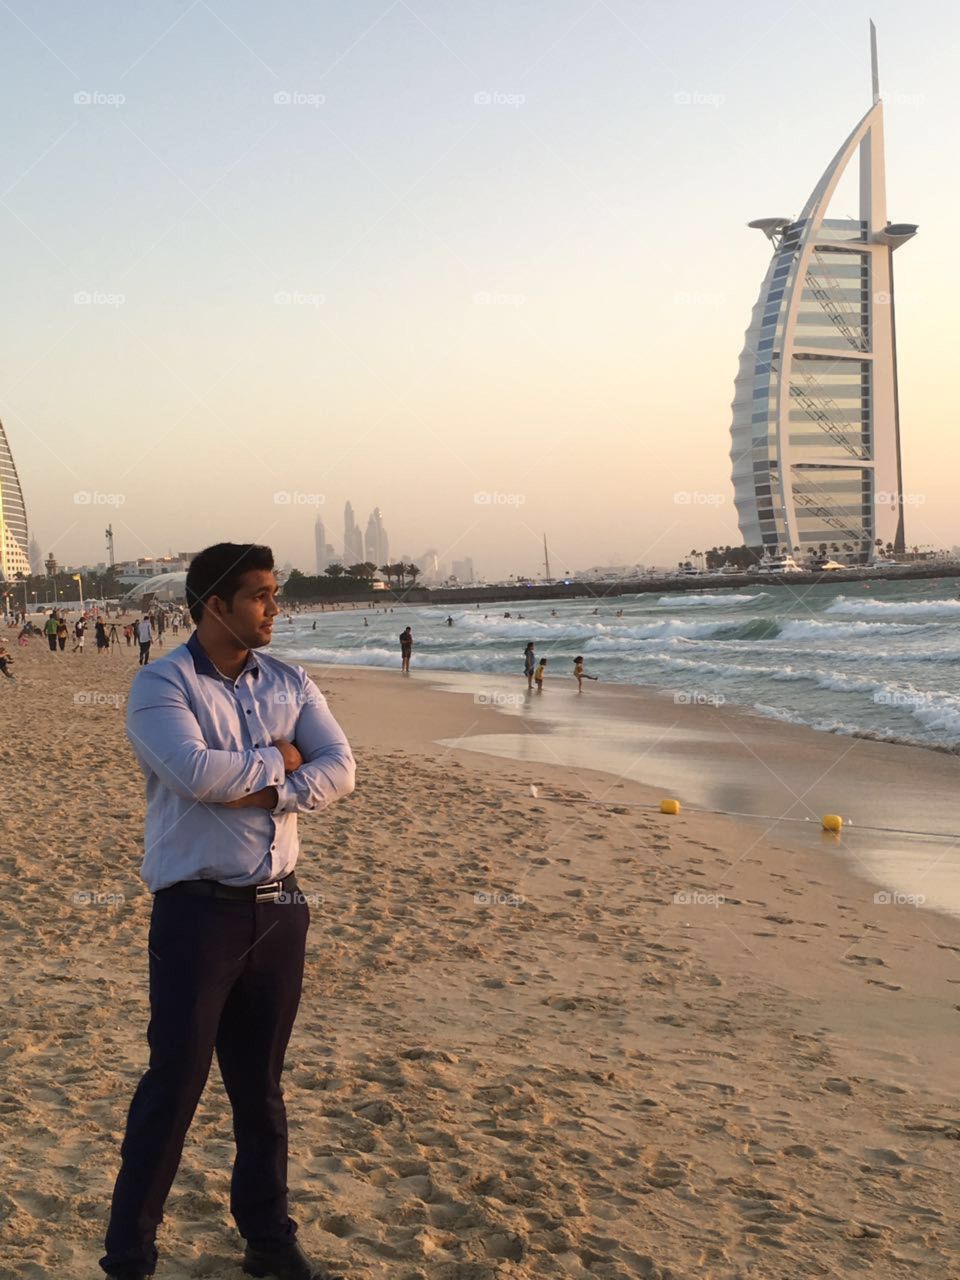 burj Al Arab sea side #awesomeweather